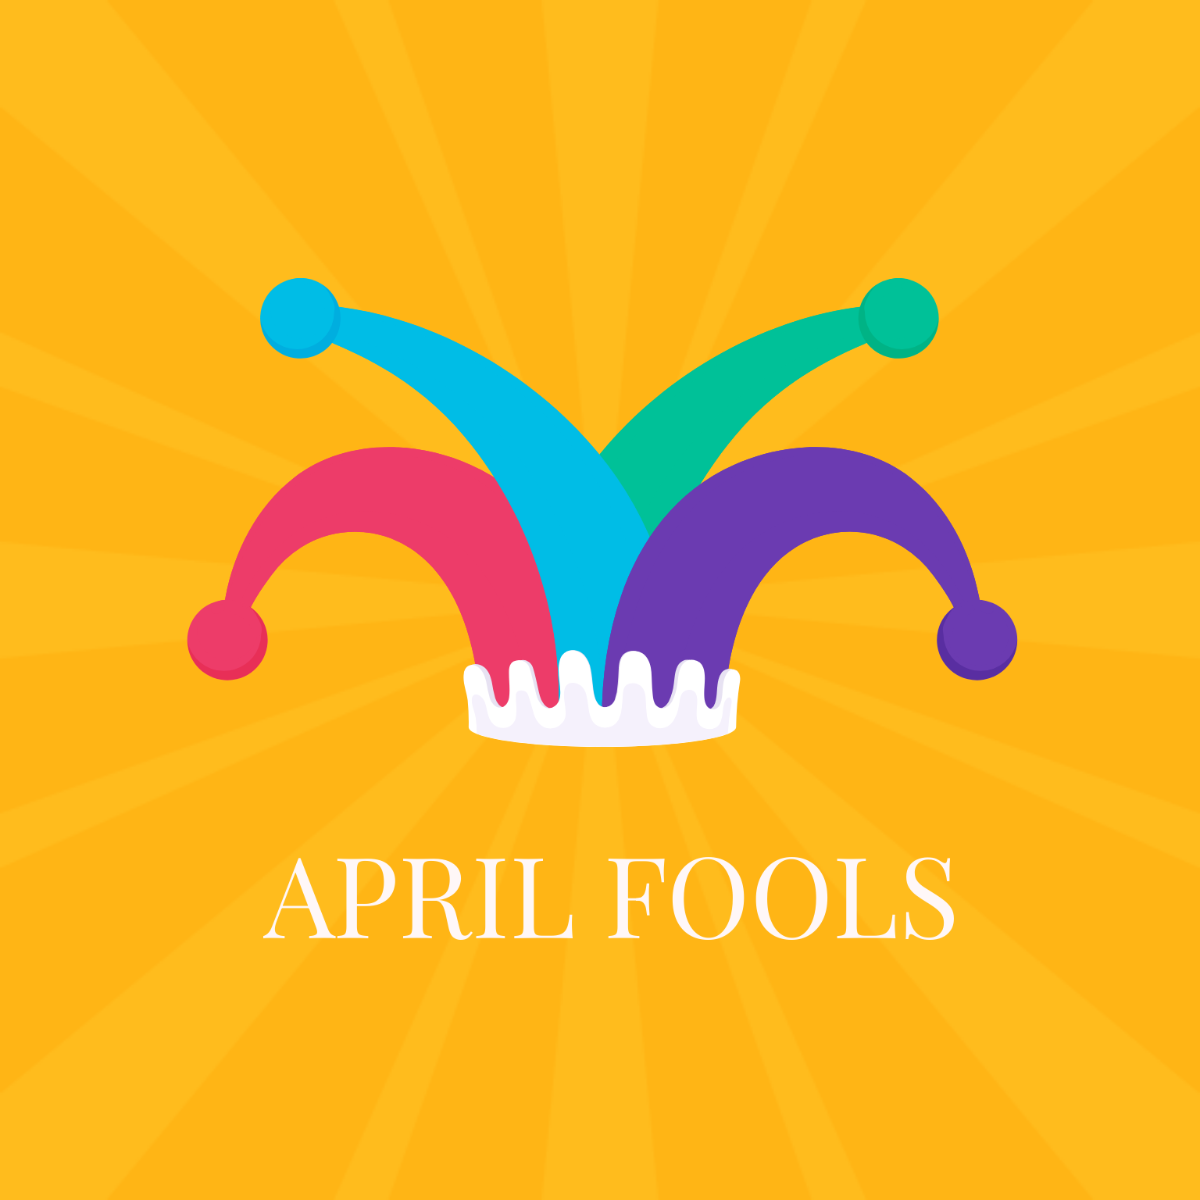 Free April Fools’ Day Symbol Template